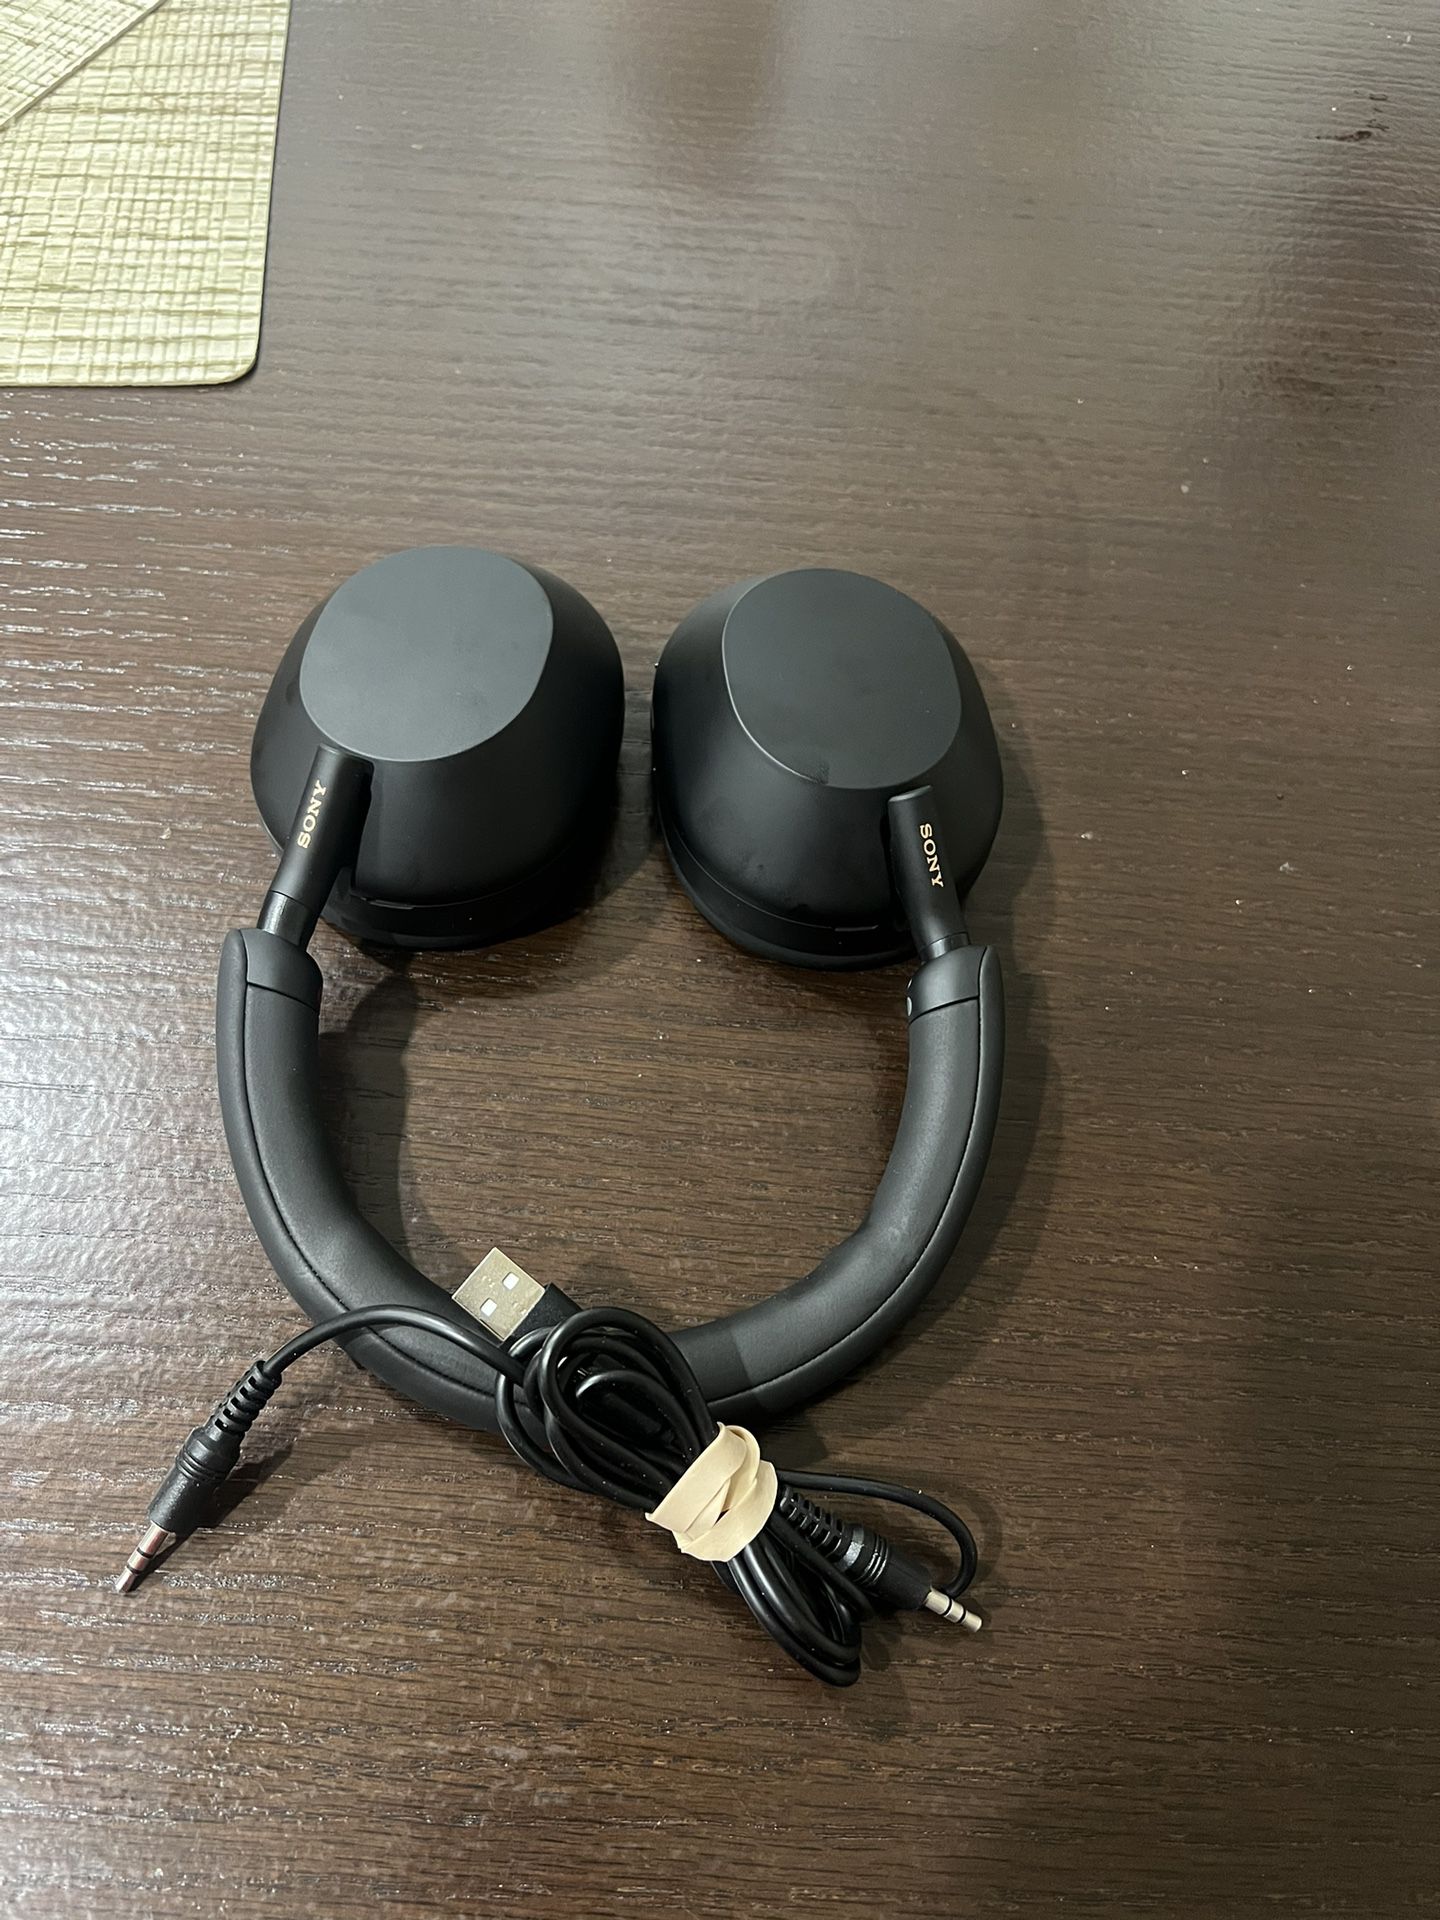 Sony WH-1000XM5 The Best Wireless Noise Canceling Headphones, Black